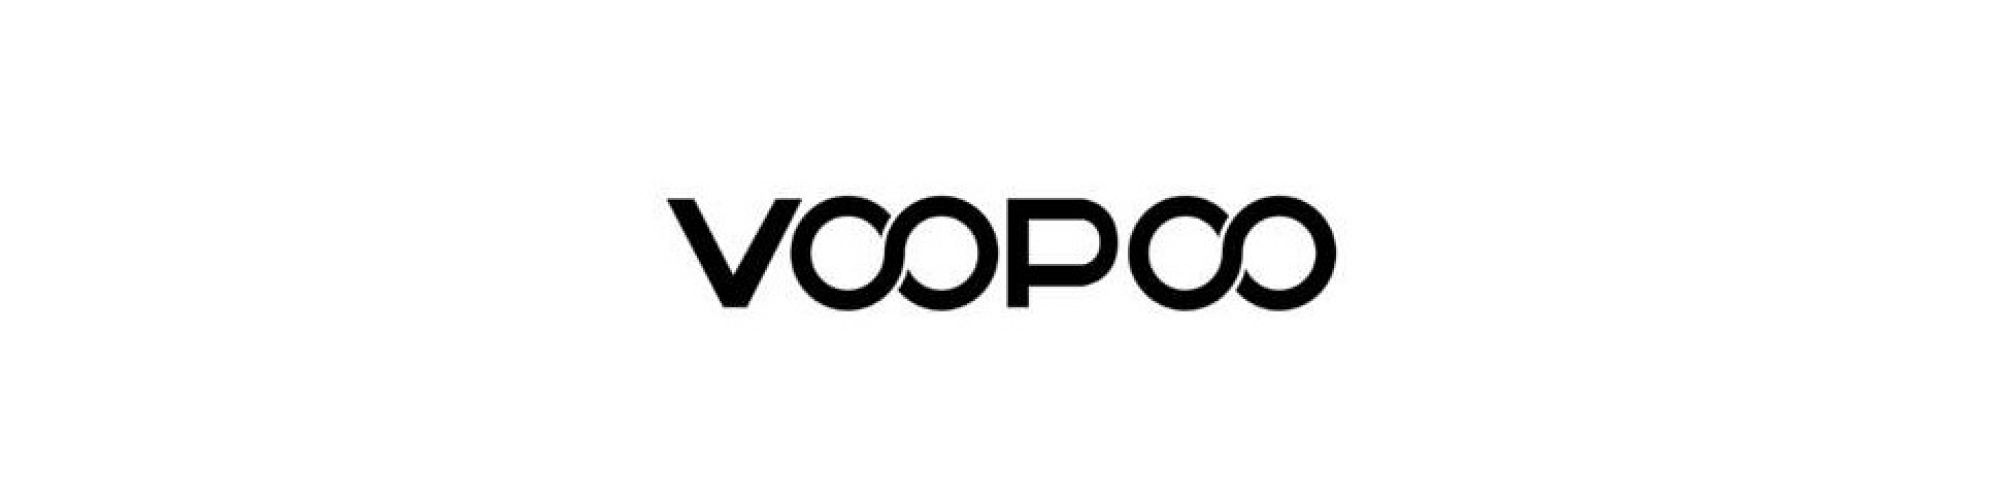 Voopoo Coils / Pods